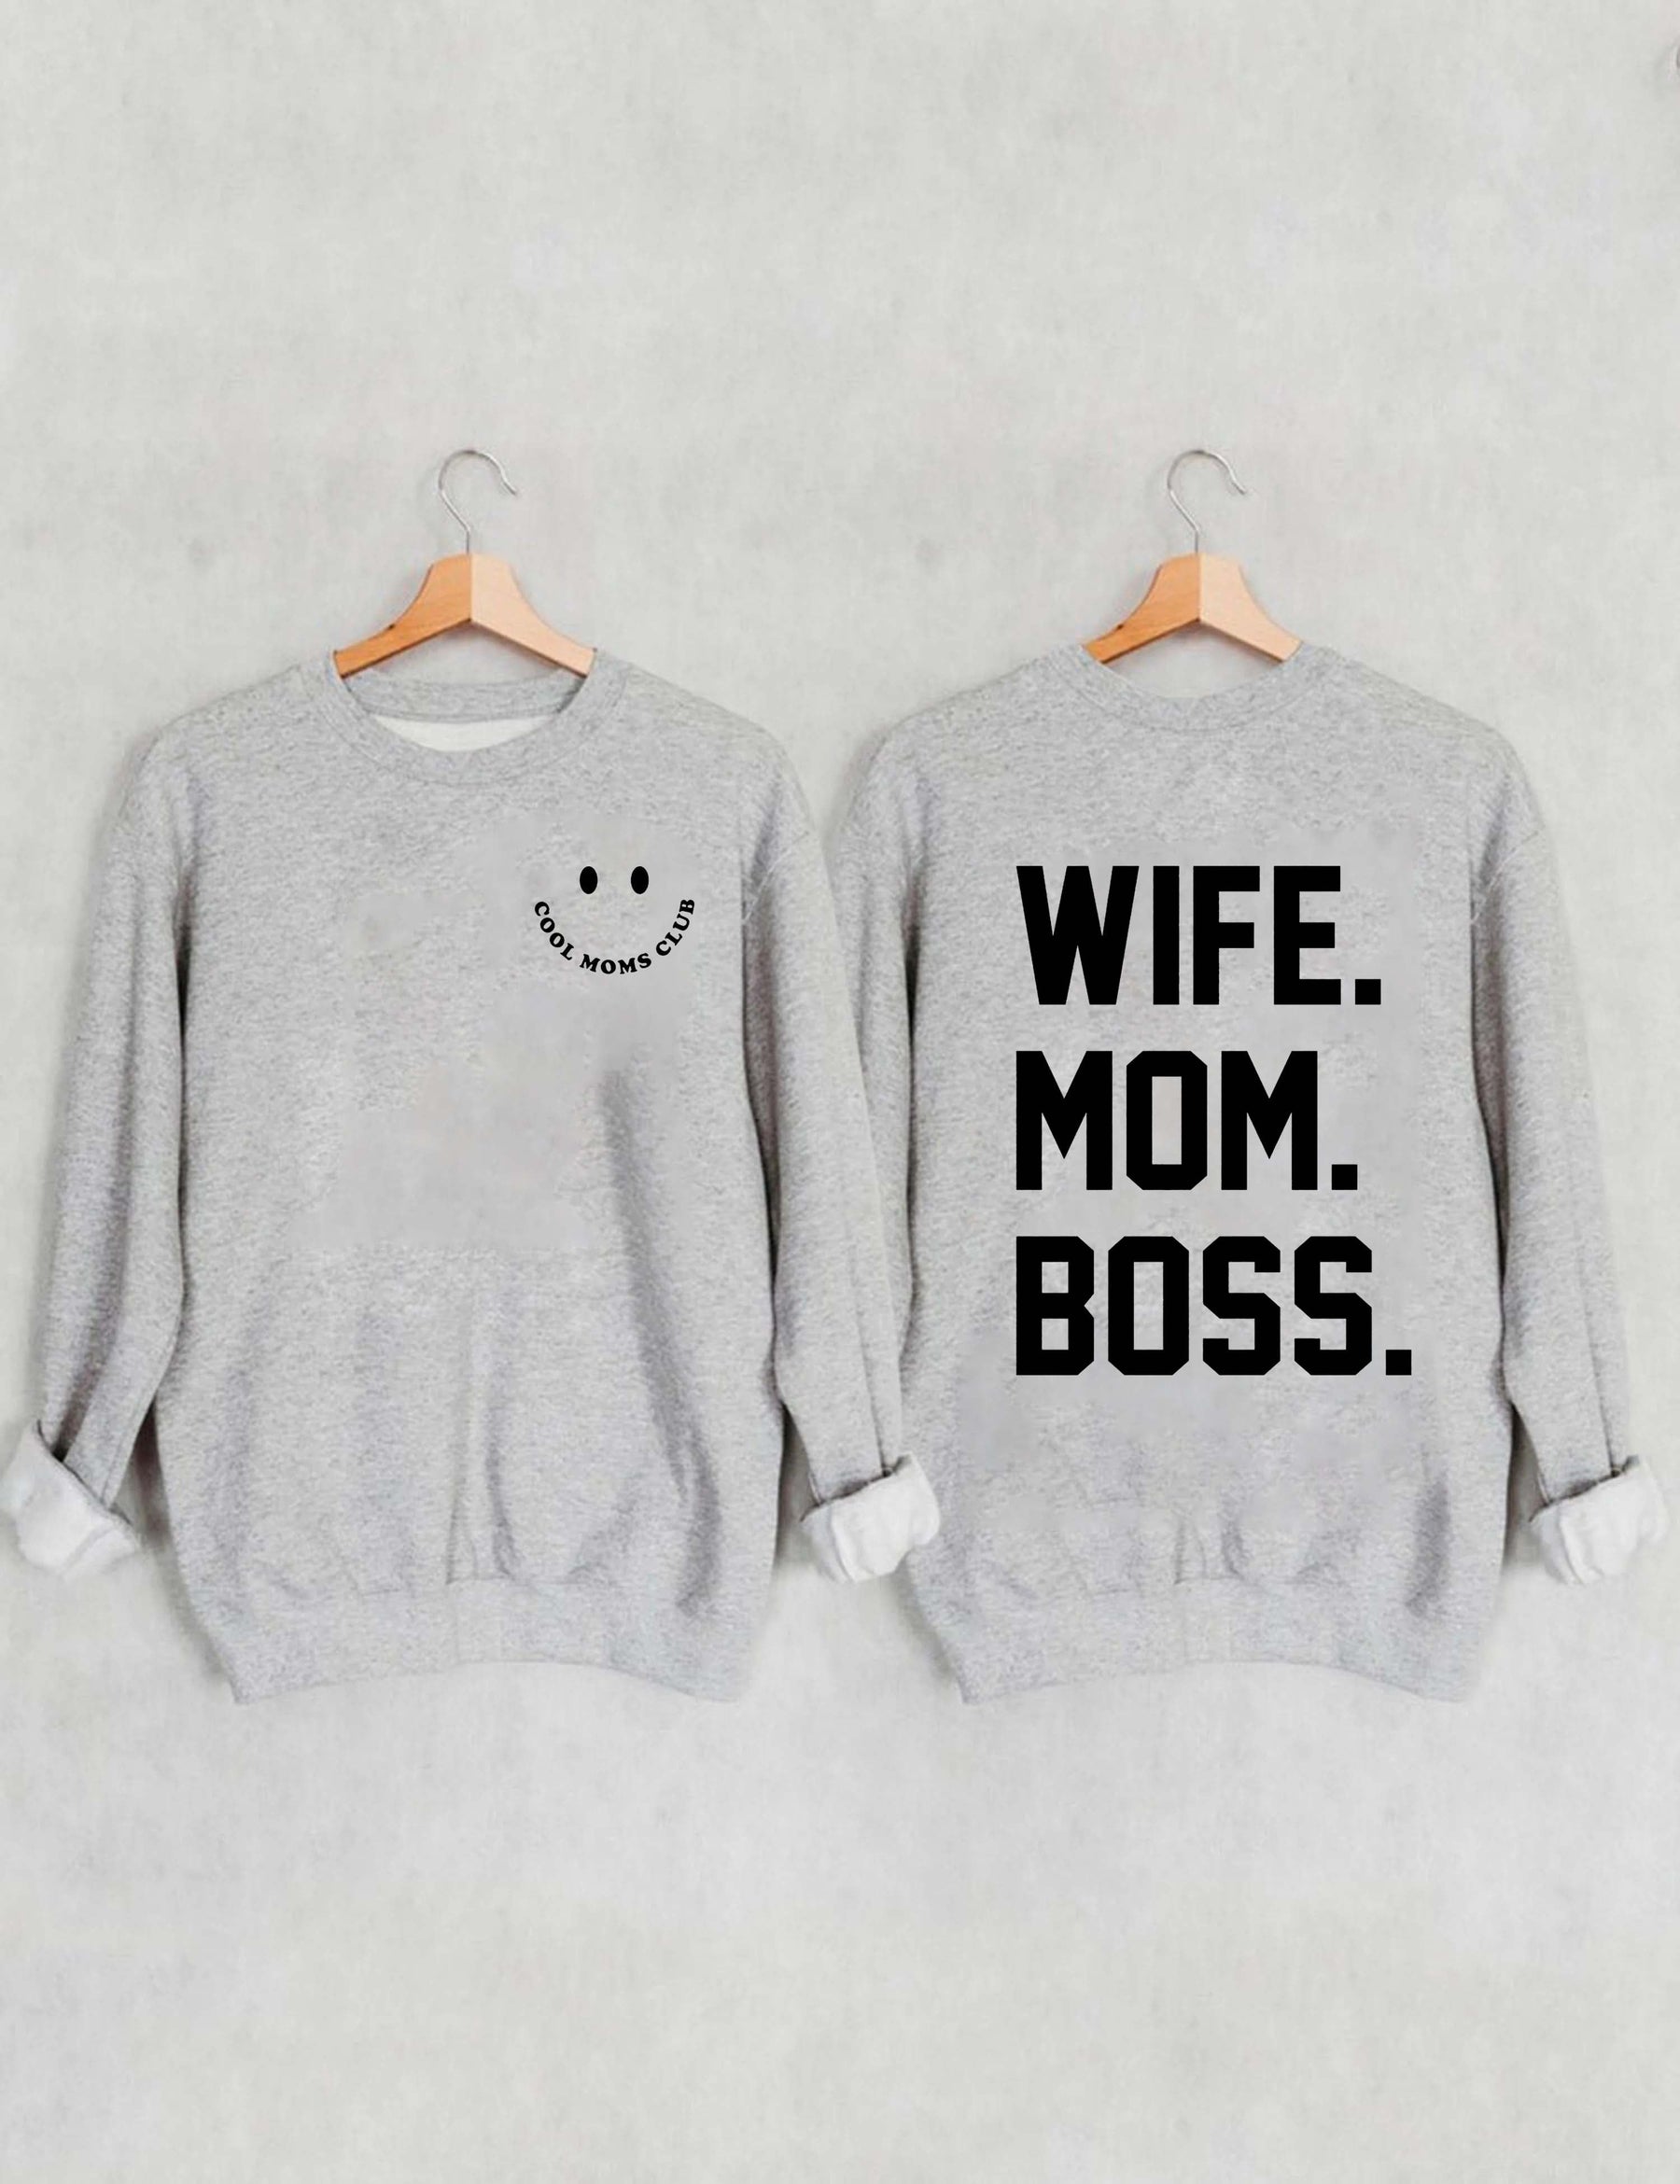 Cool Moms Club. Wife Mom Boss Sweatshirt